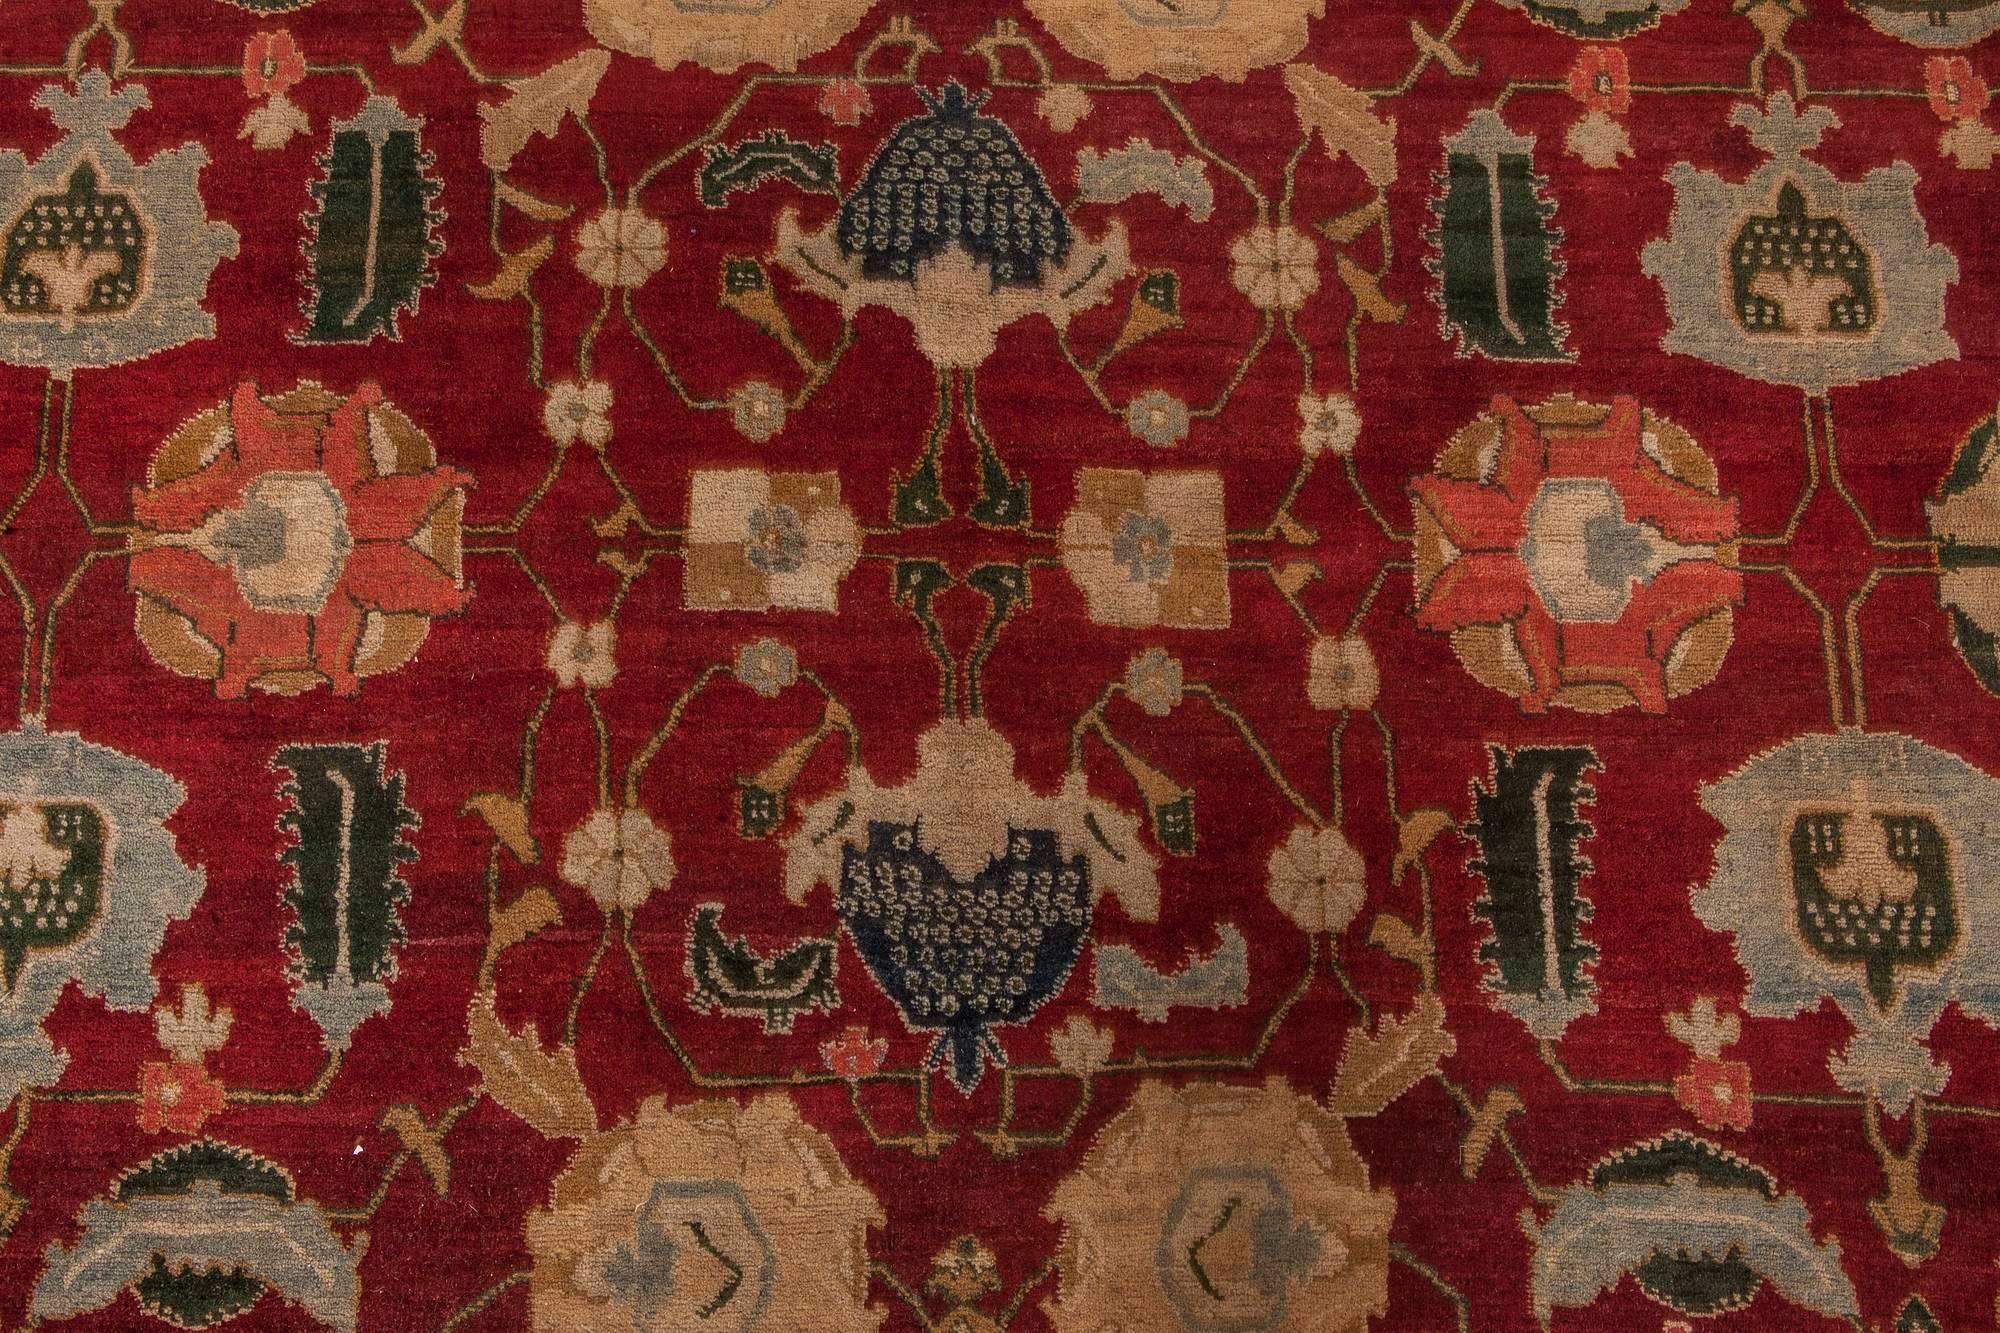 Antique Indian Agra Red Botanic Handmade Wool Rug
Size: 11'7